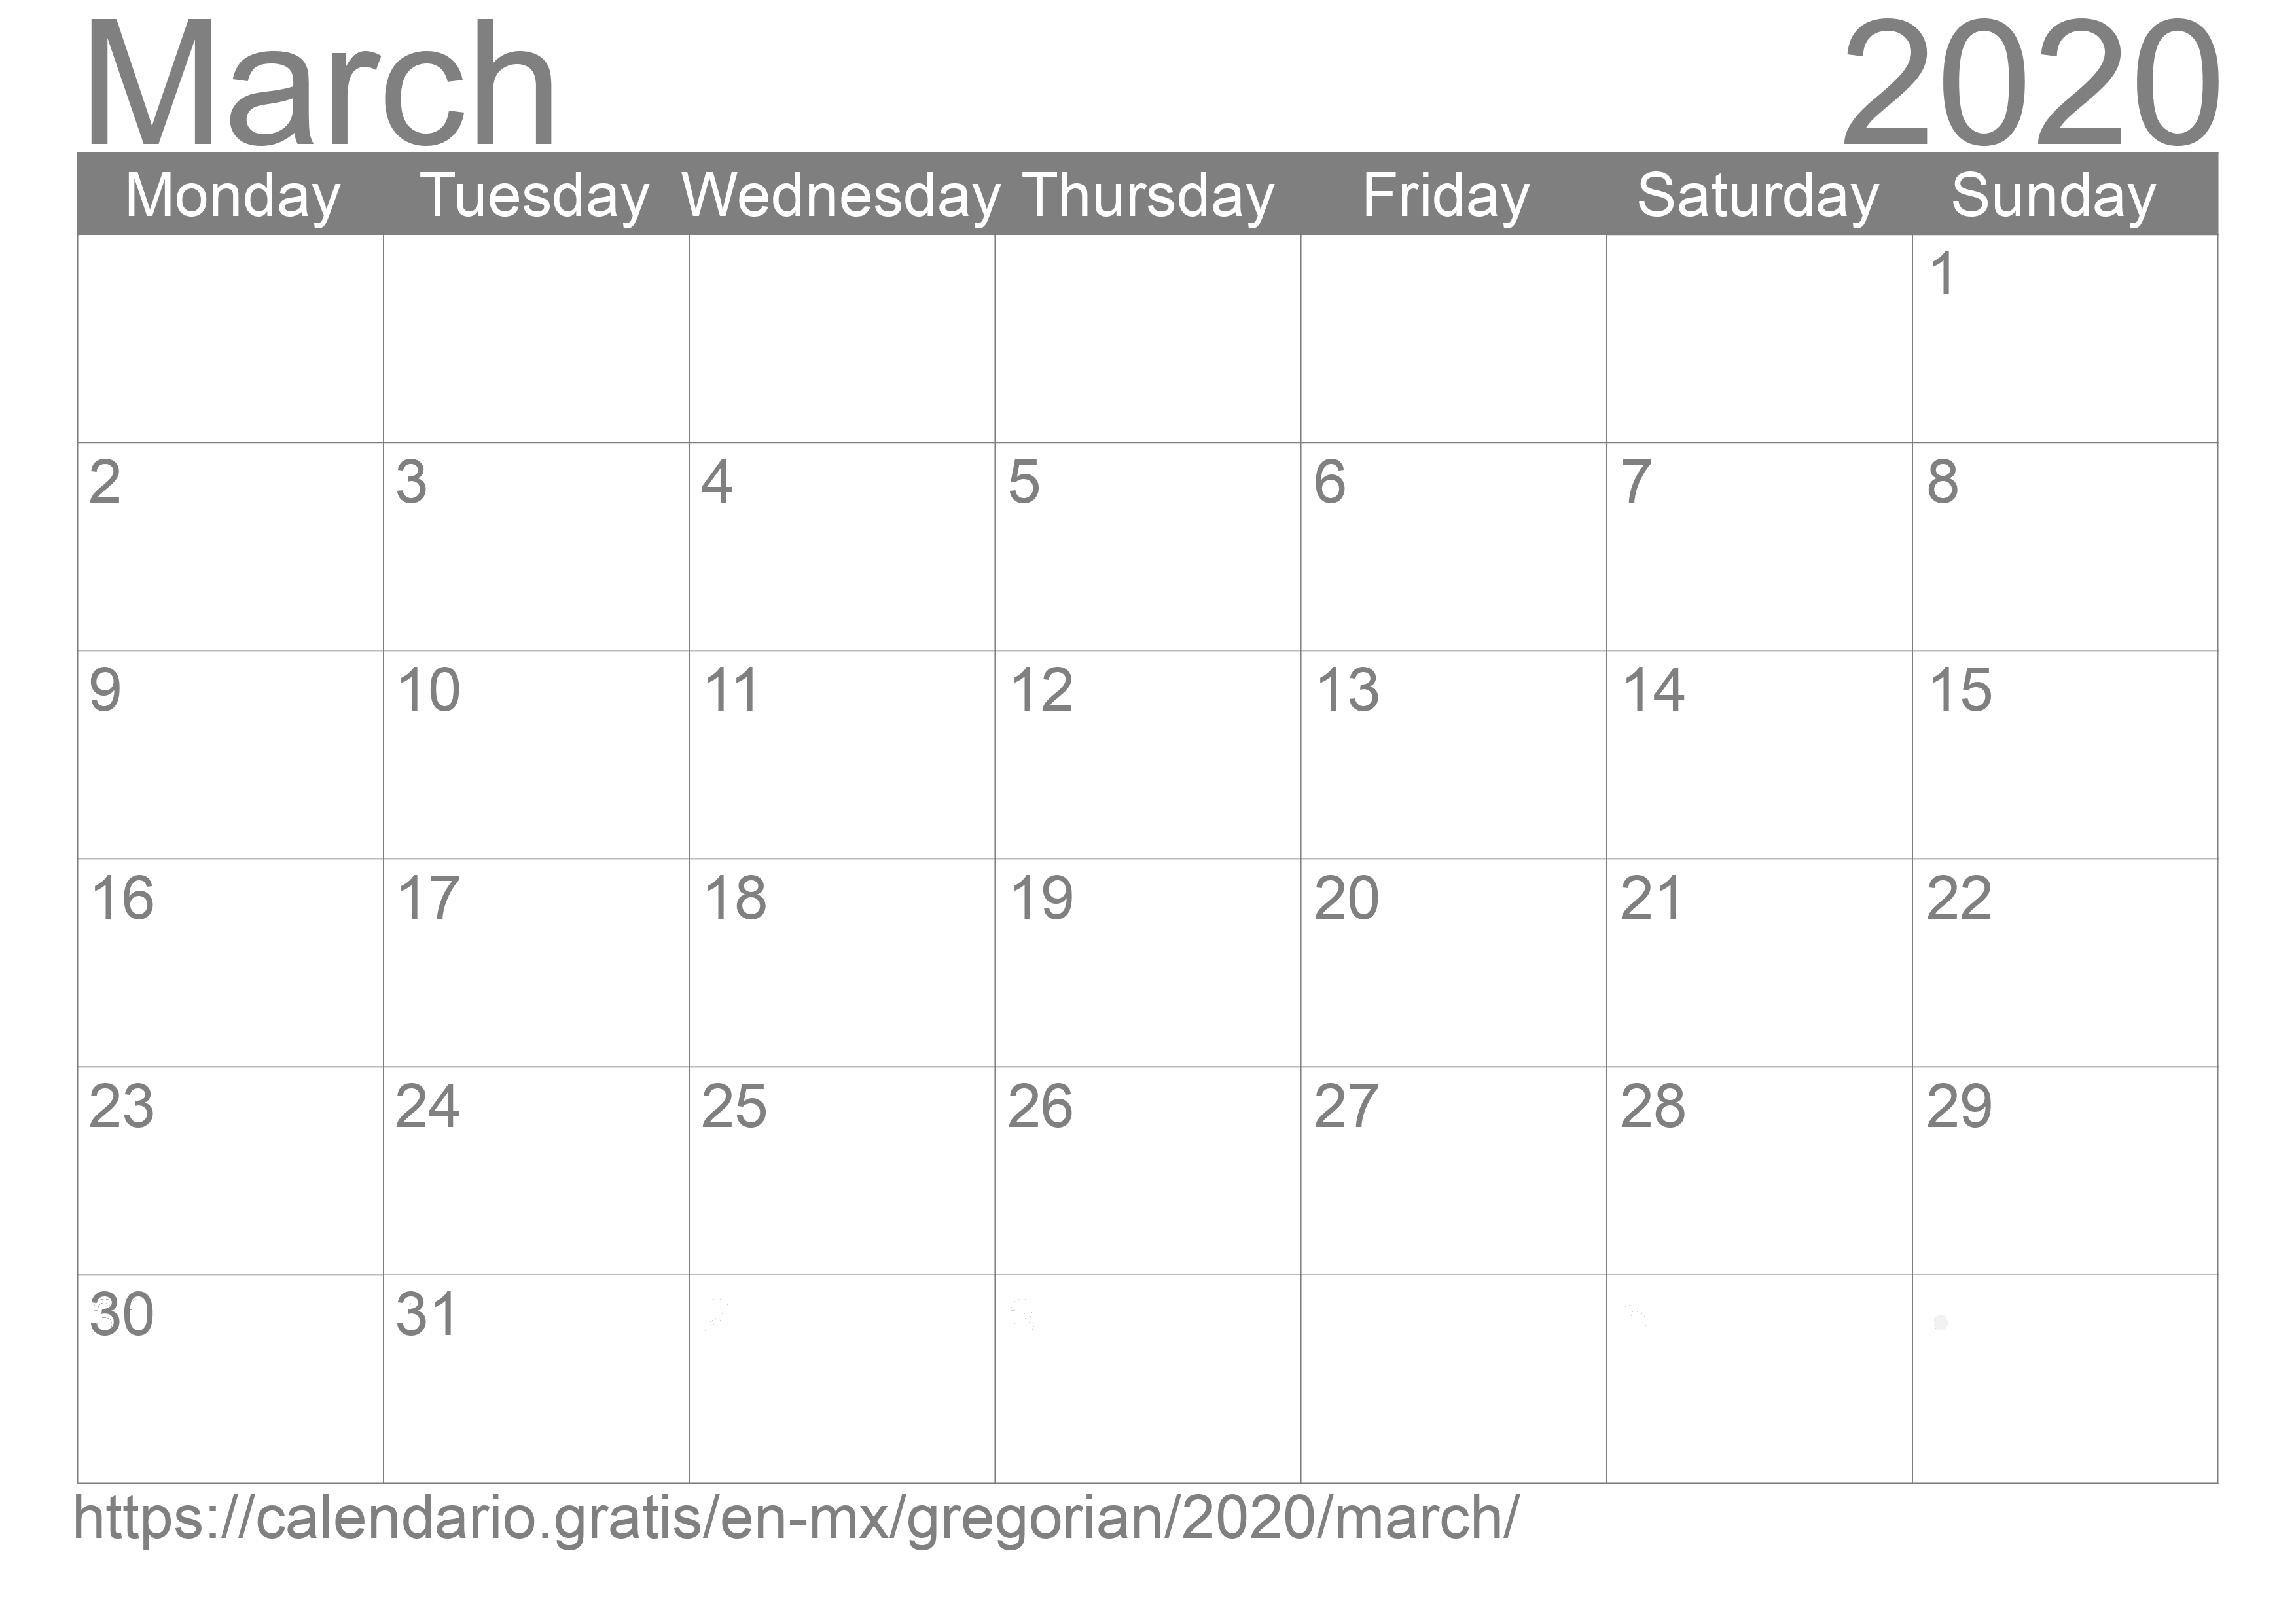 Calendar March 2020 to print